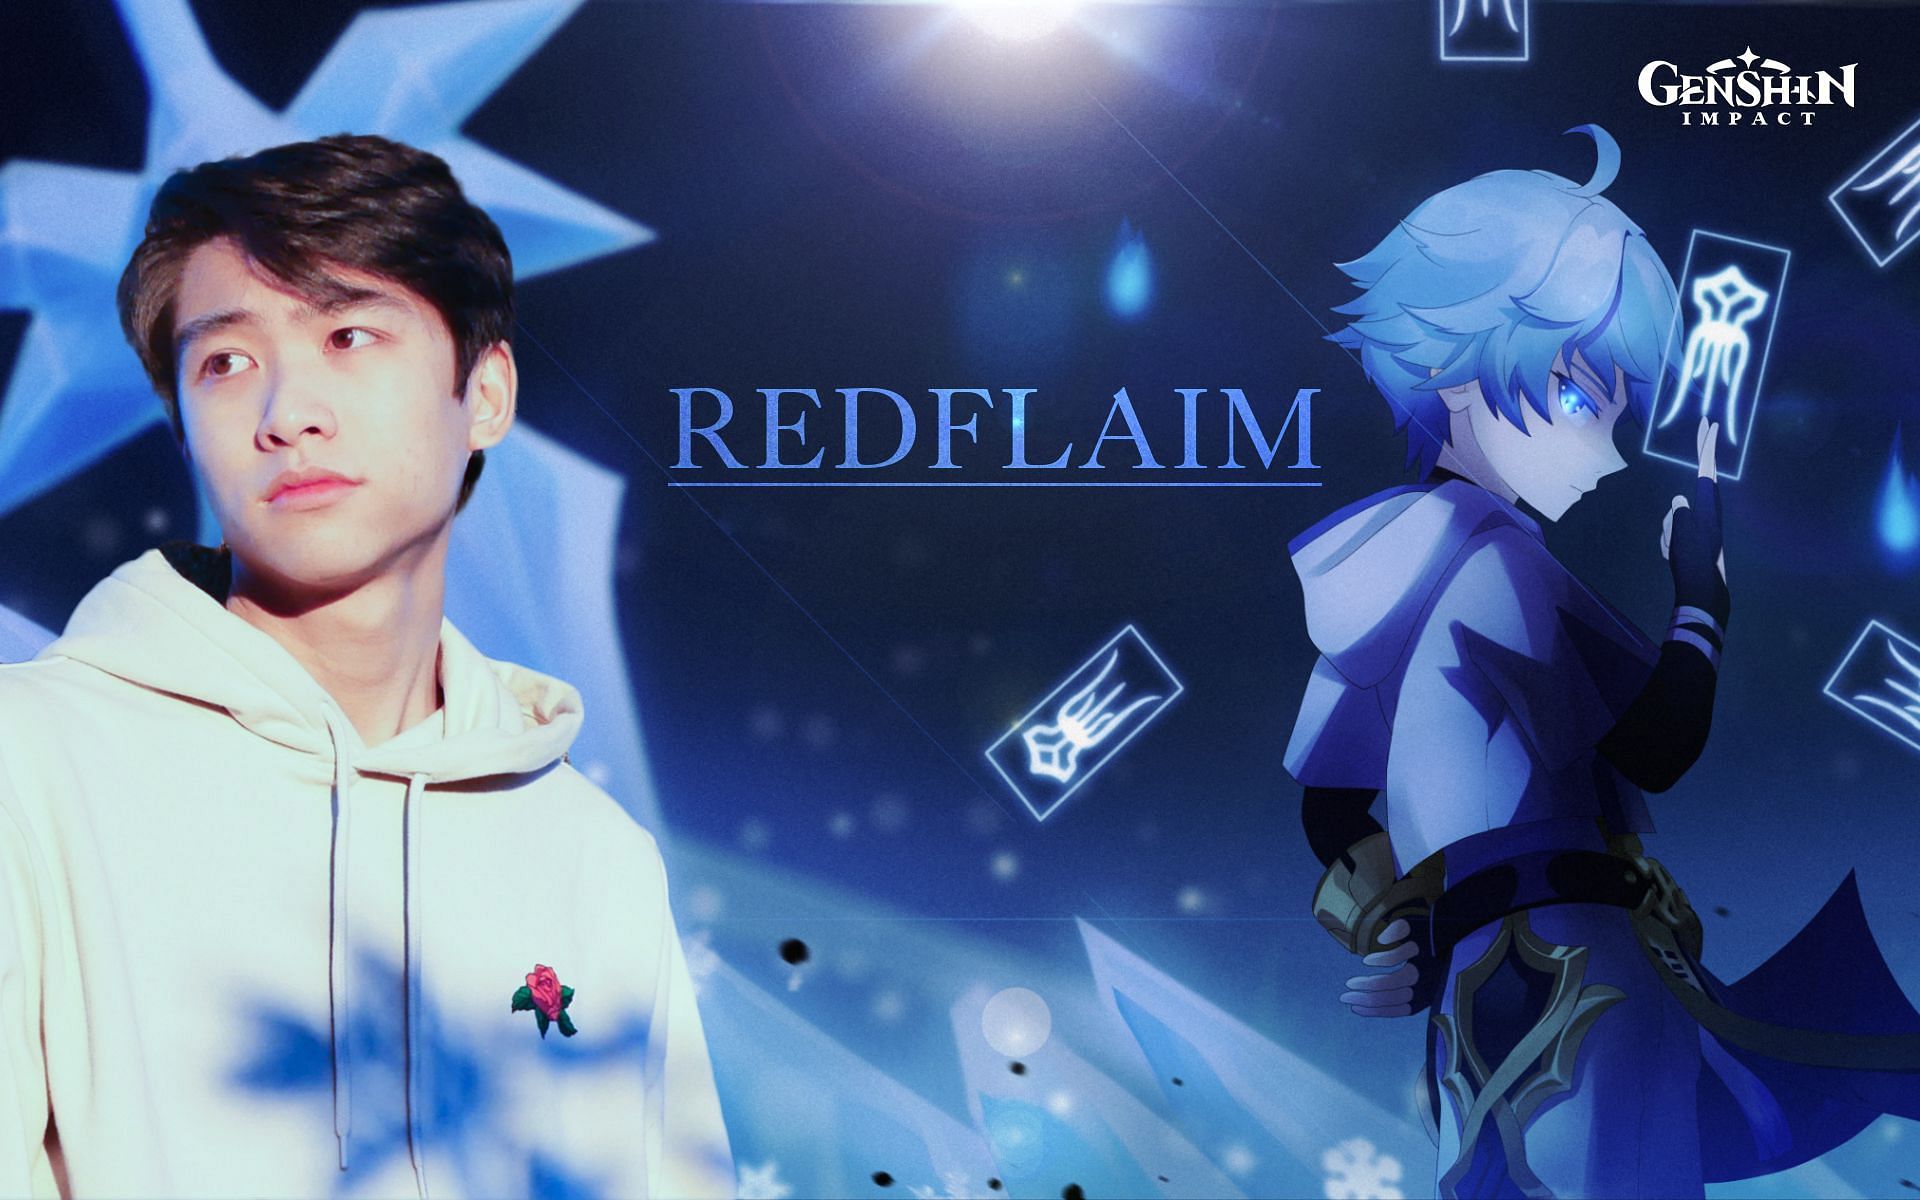 RedFlaim is a YouTuber who creates content around Genshin Impact (Image via Sportskeeda)